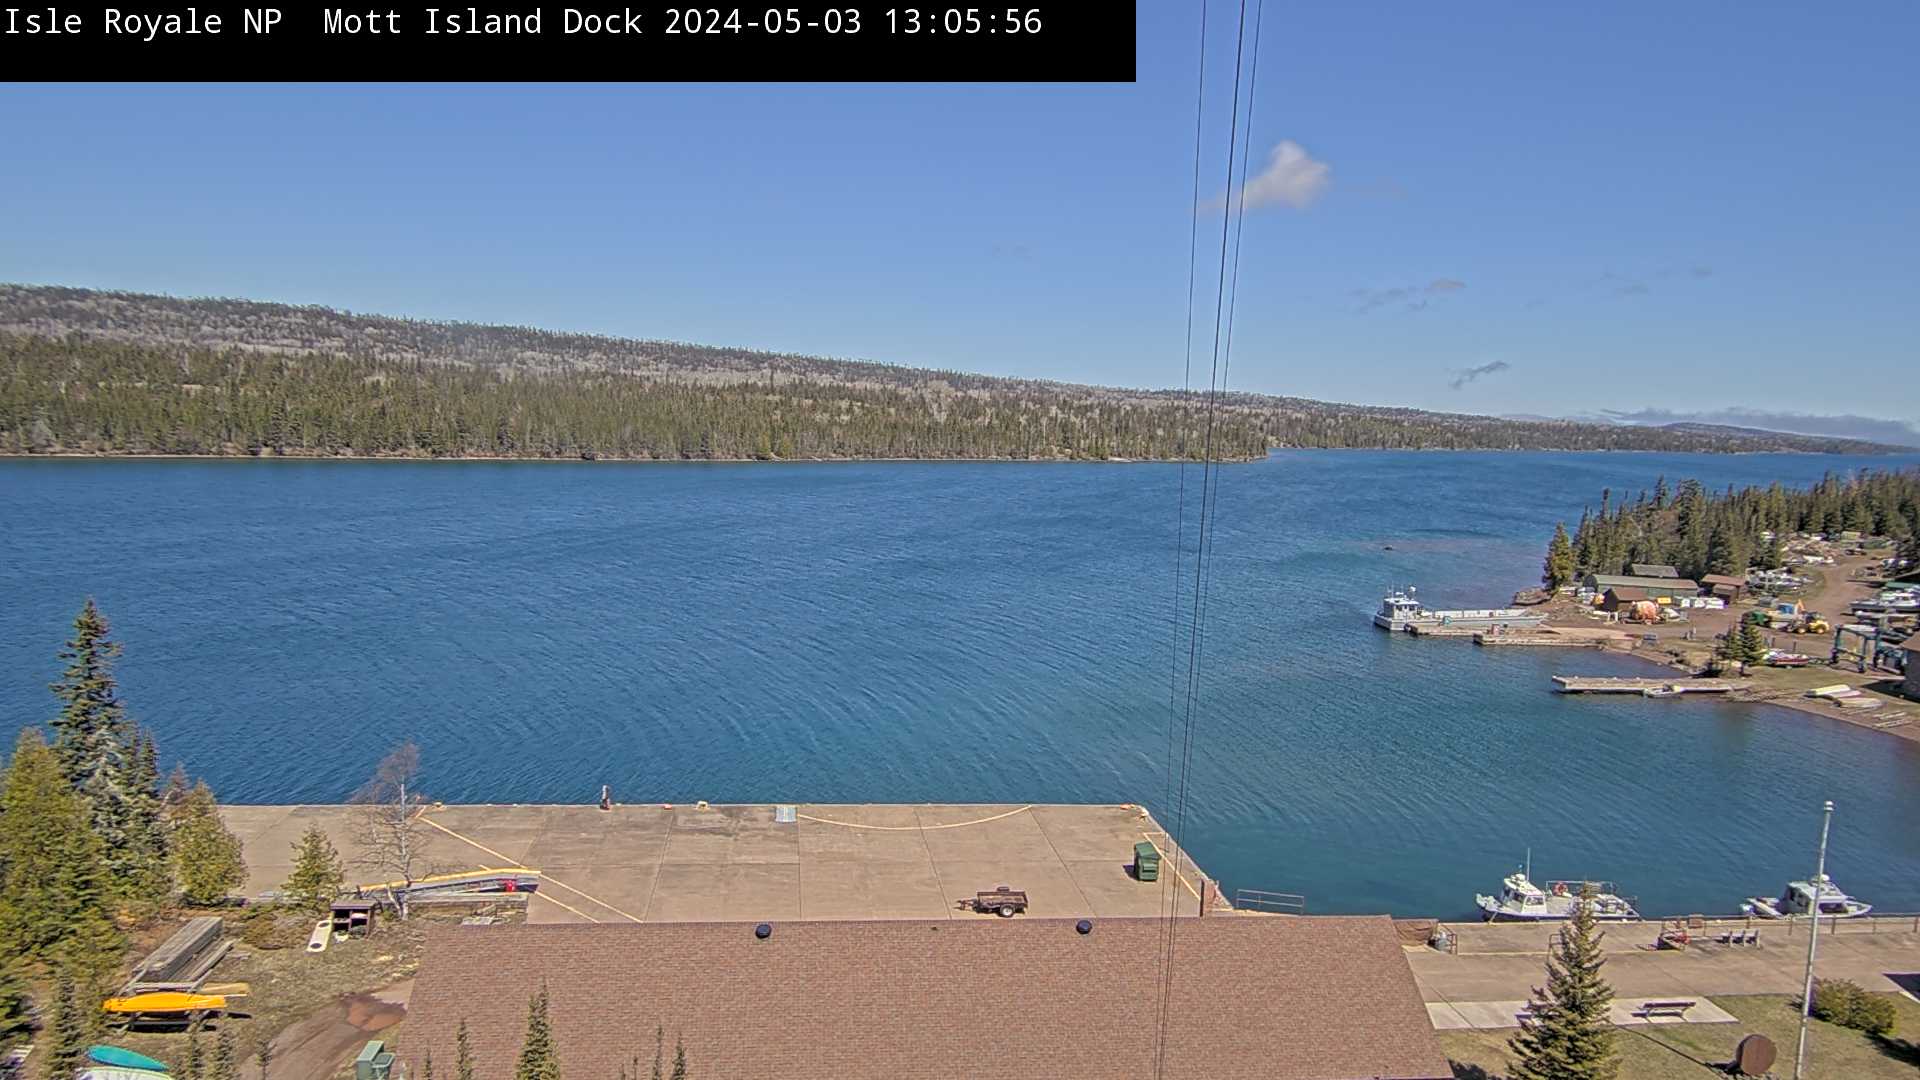 Mott Island Dock Webcam preview image